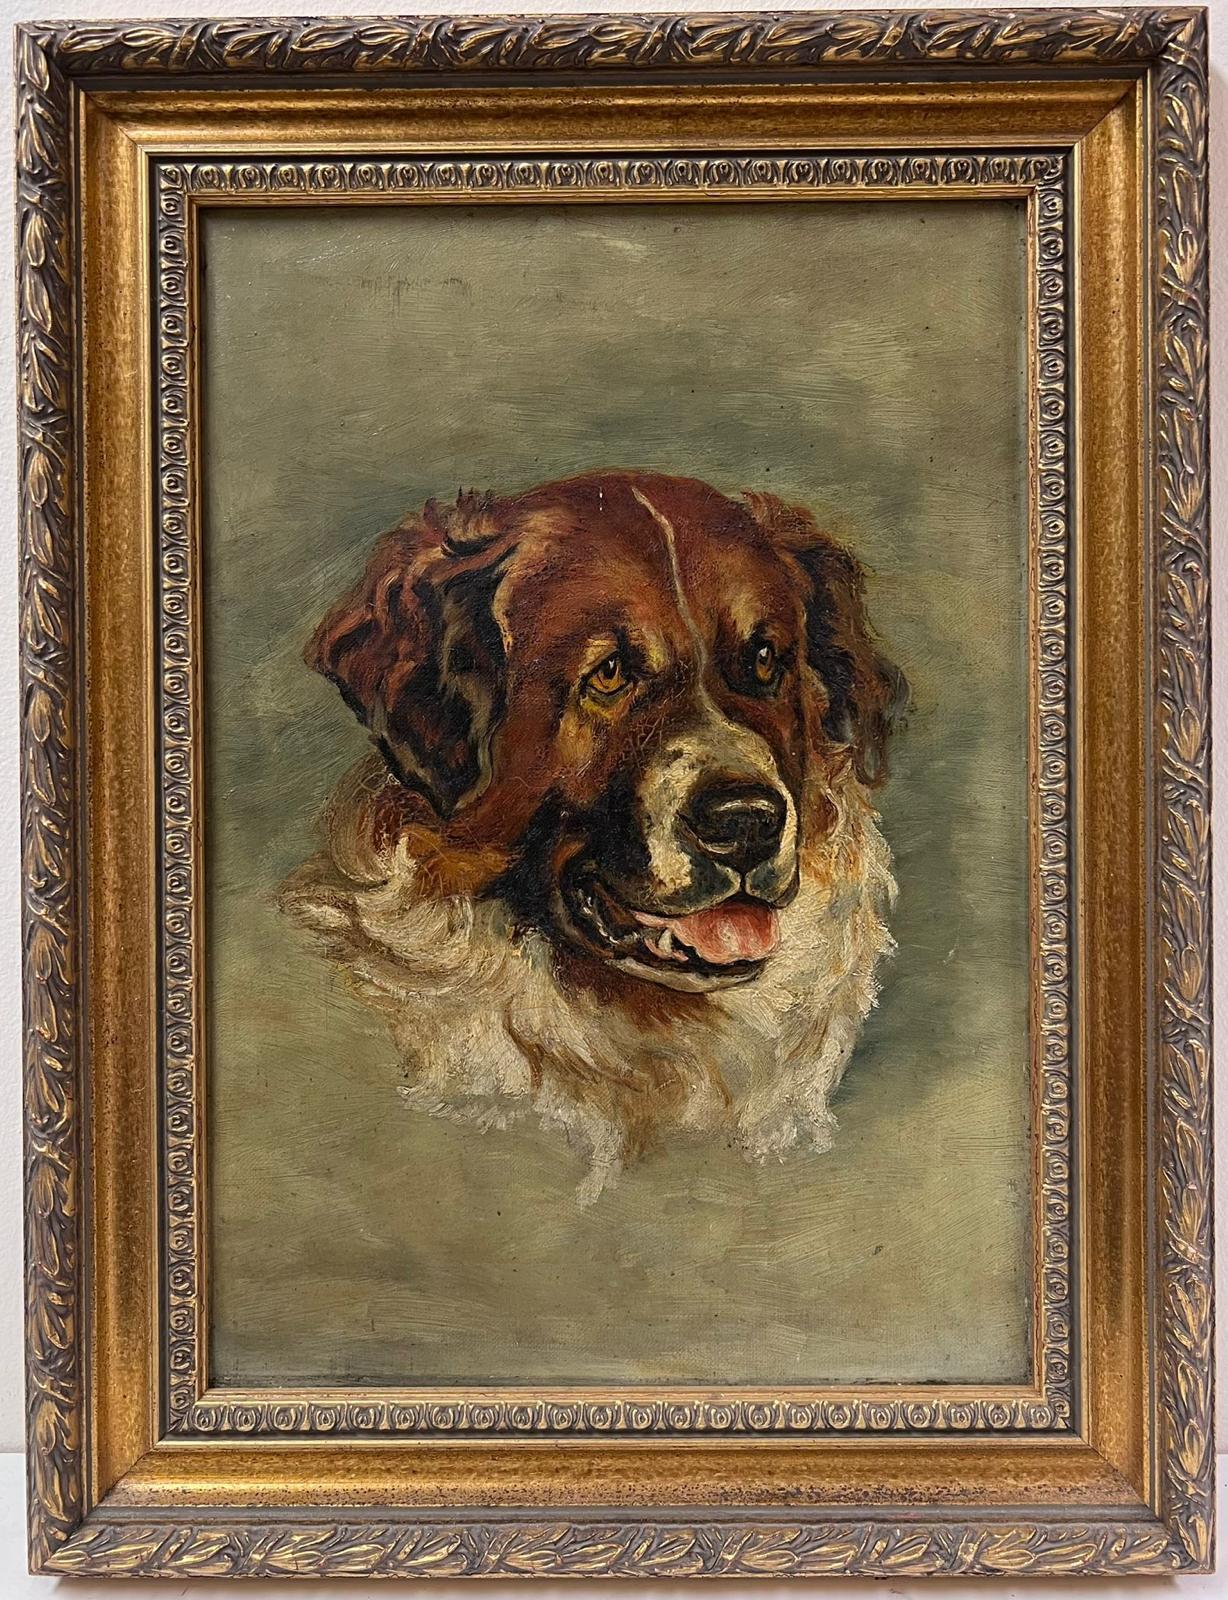 Antique English artist Portrait Painting - Head Portrait of a Dog St. Bernard? Antique English Oil Painting on Canvas